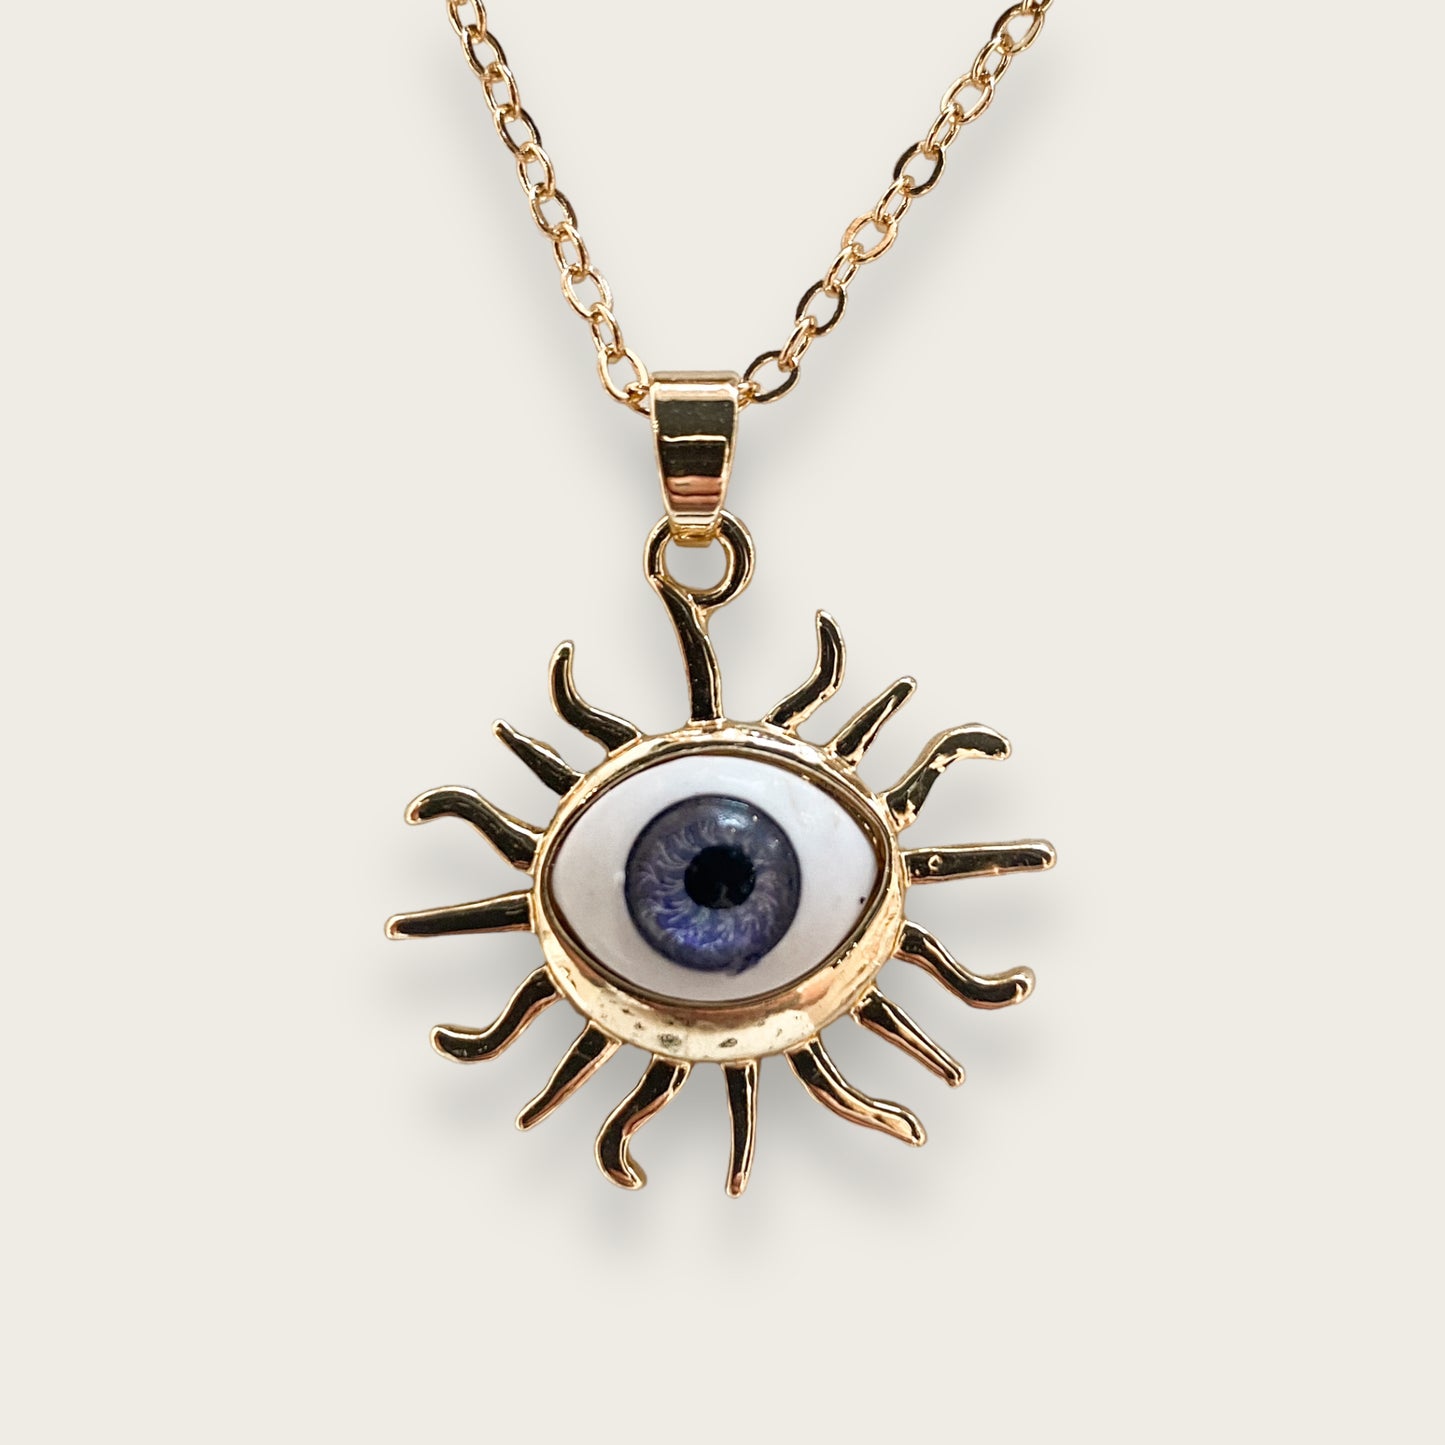 Flaming Eye Necklace